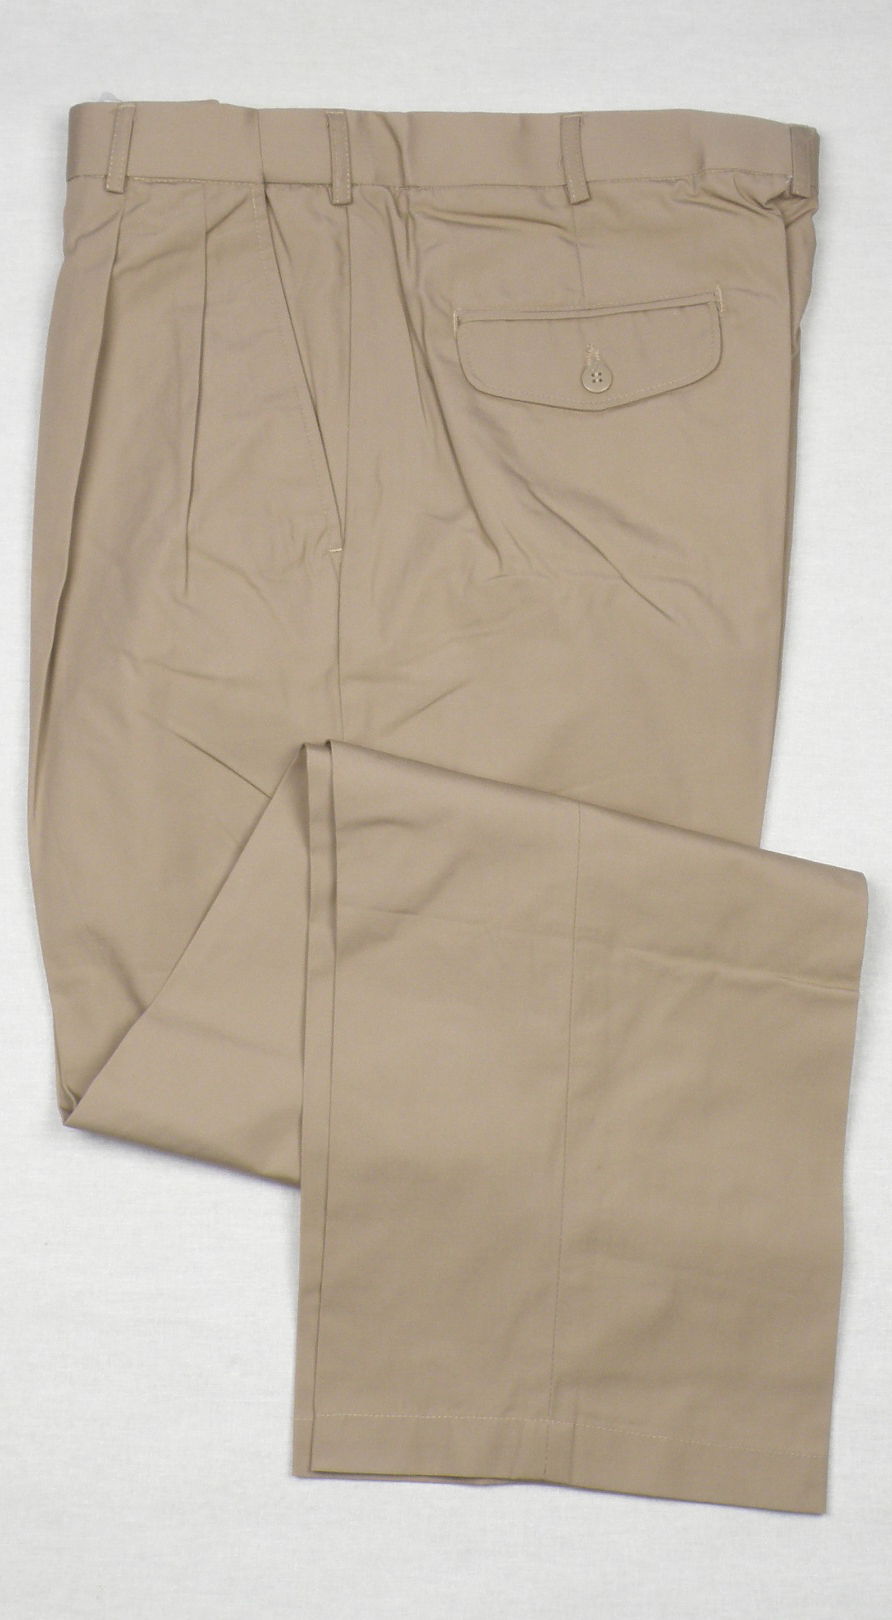 Haband NWT $35 Expandable Waist Cotton Chino New Men's Dress Pants - 2 ...